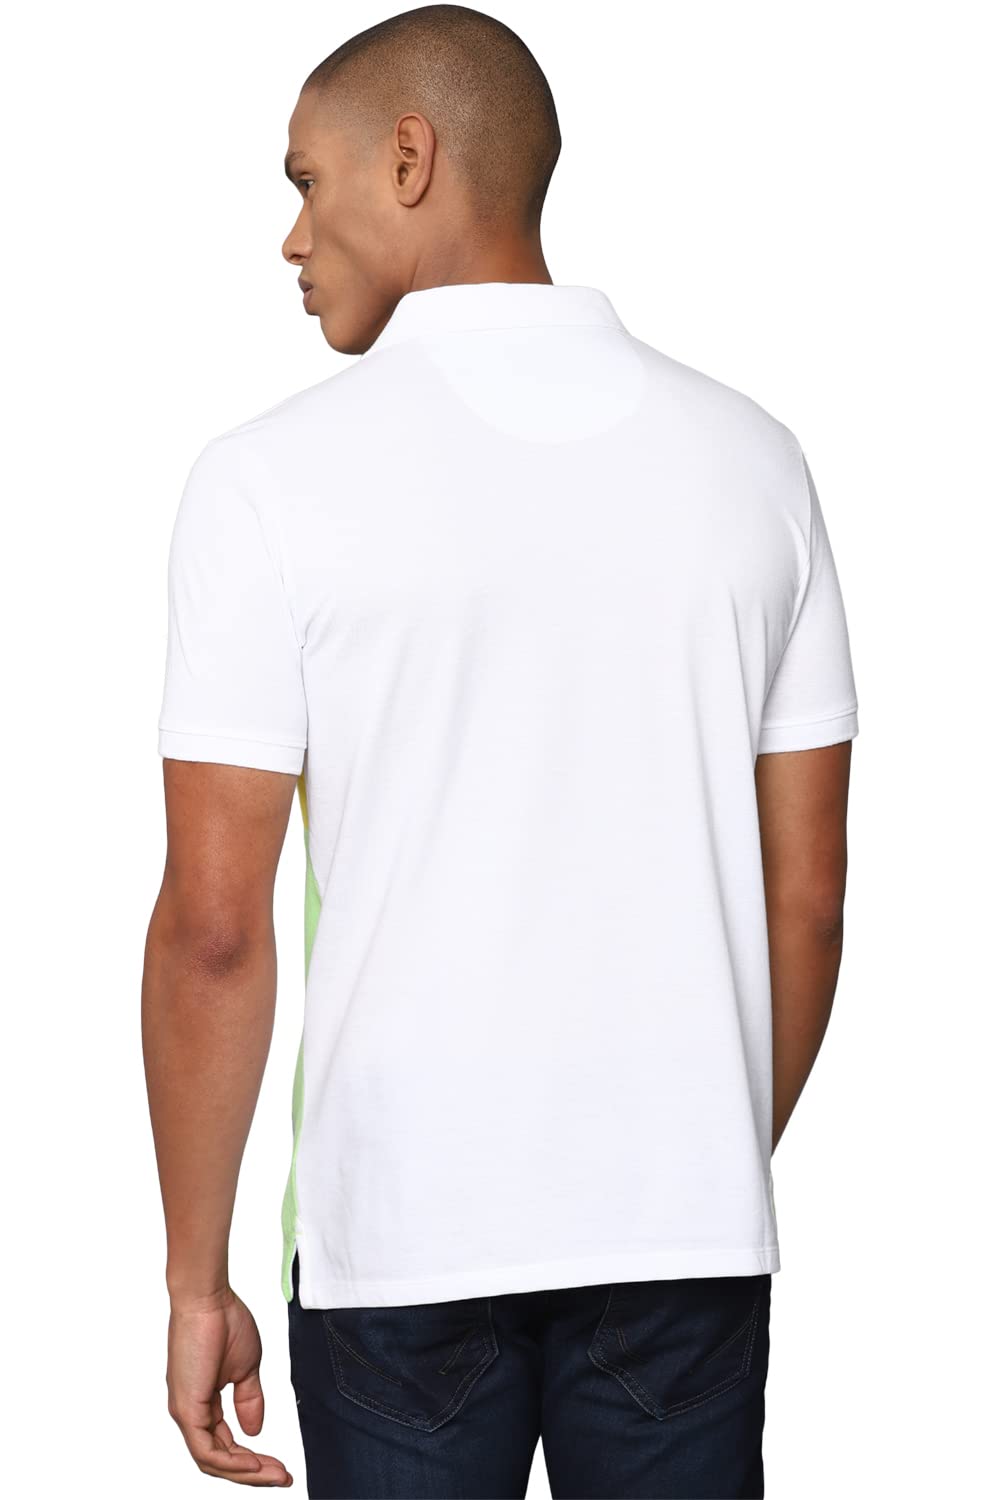 Allen Solly Men's Solid Regular Fit T-Shirt (ASKPCURGF294280_White M)